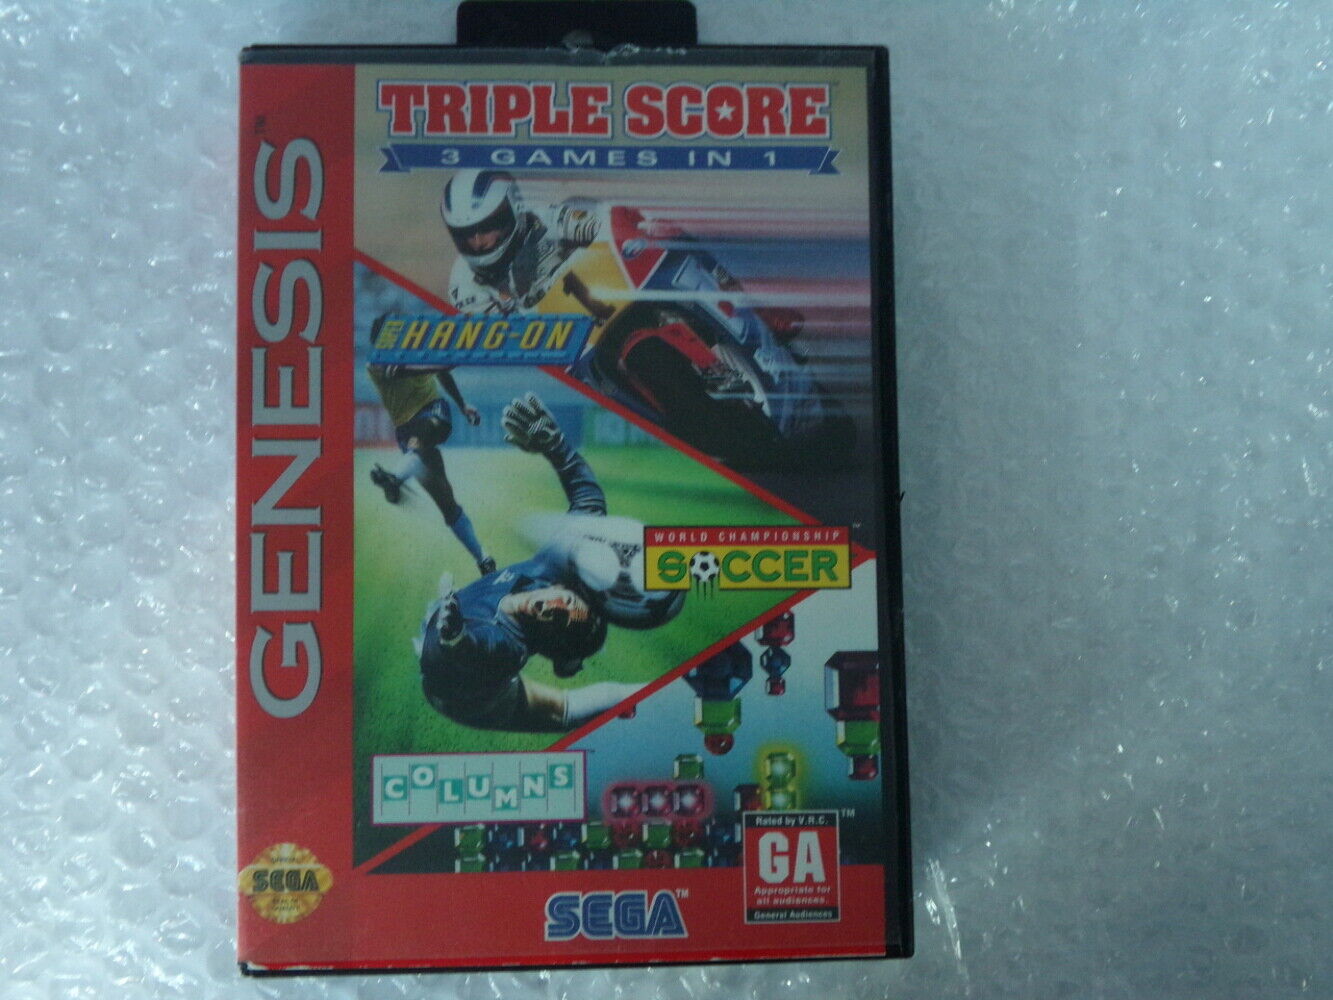 Triple Score 3 Games in 1 Sega Genesis Boxed Used